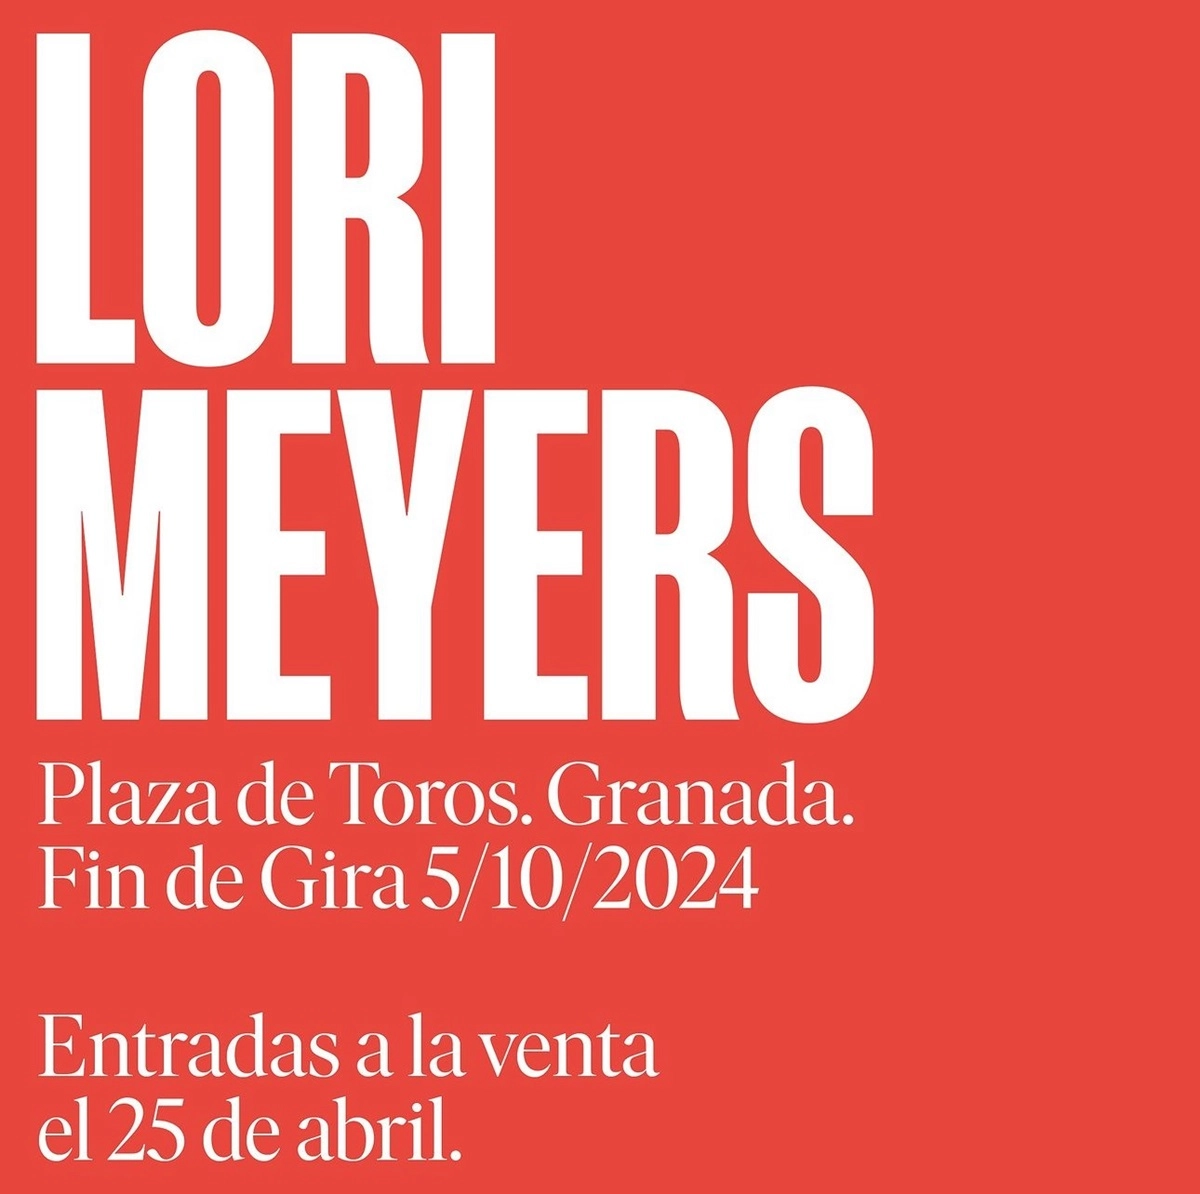 Lori Meyers at Plaza de Toros de Granada Tickets